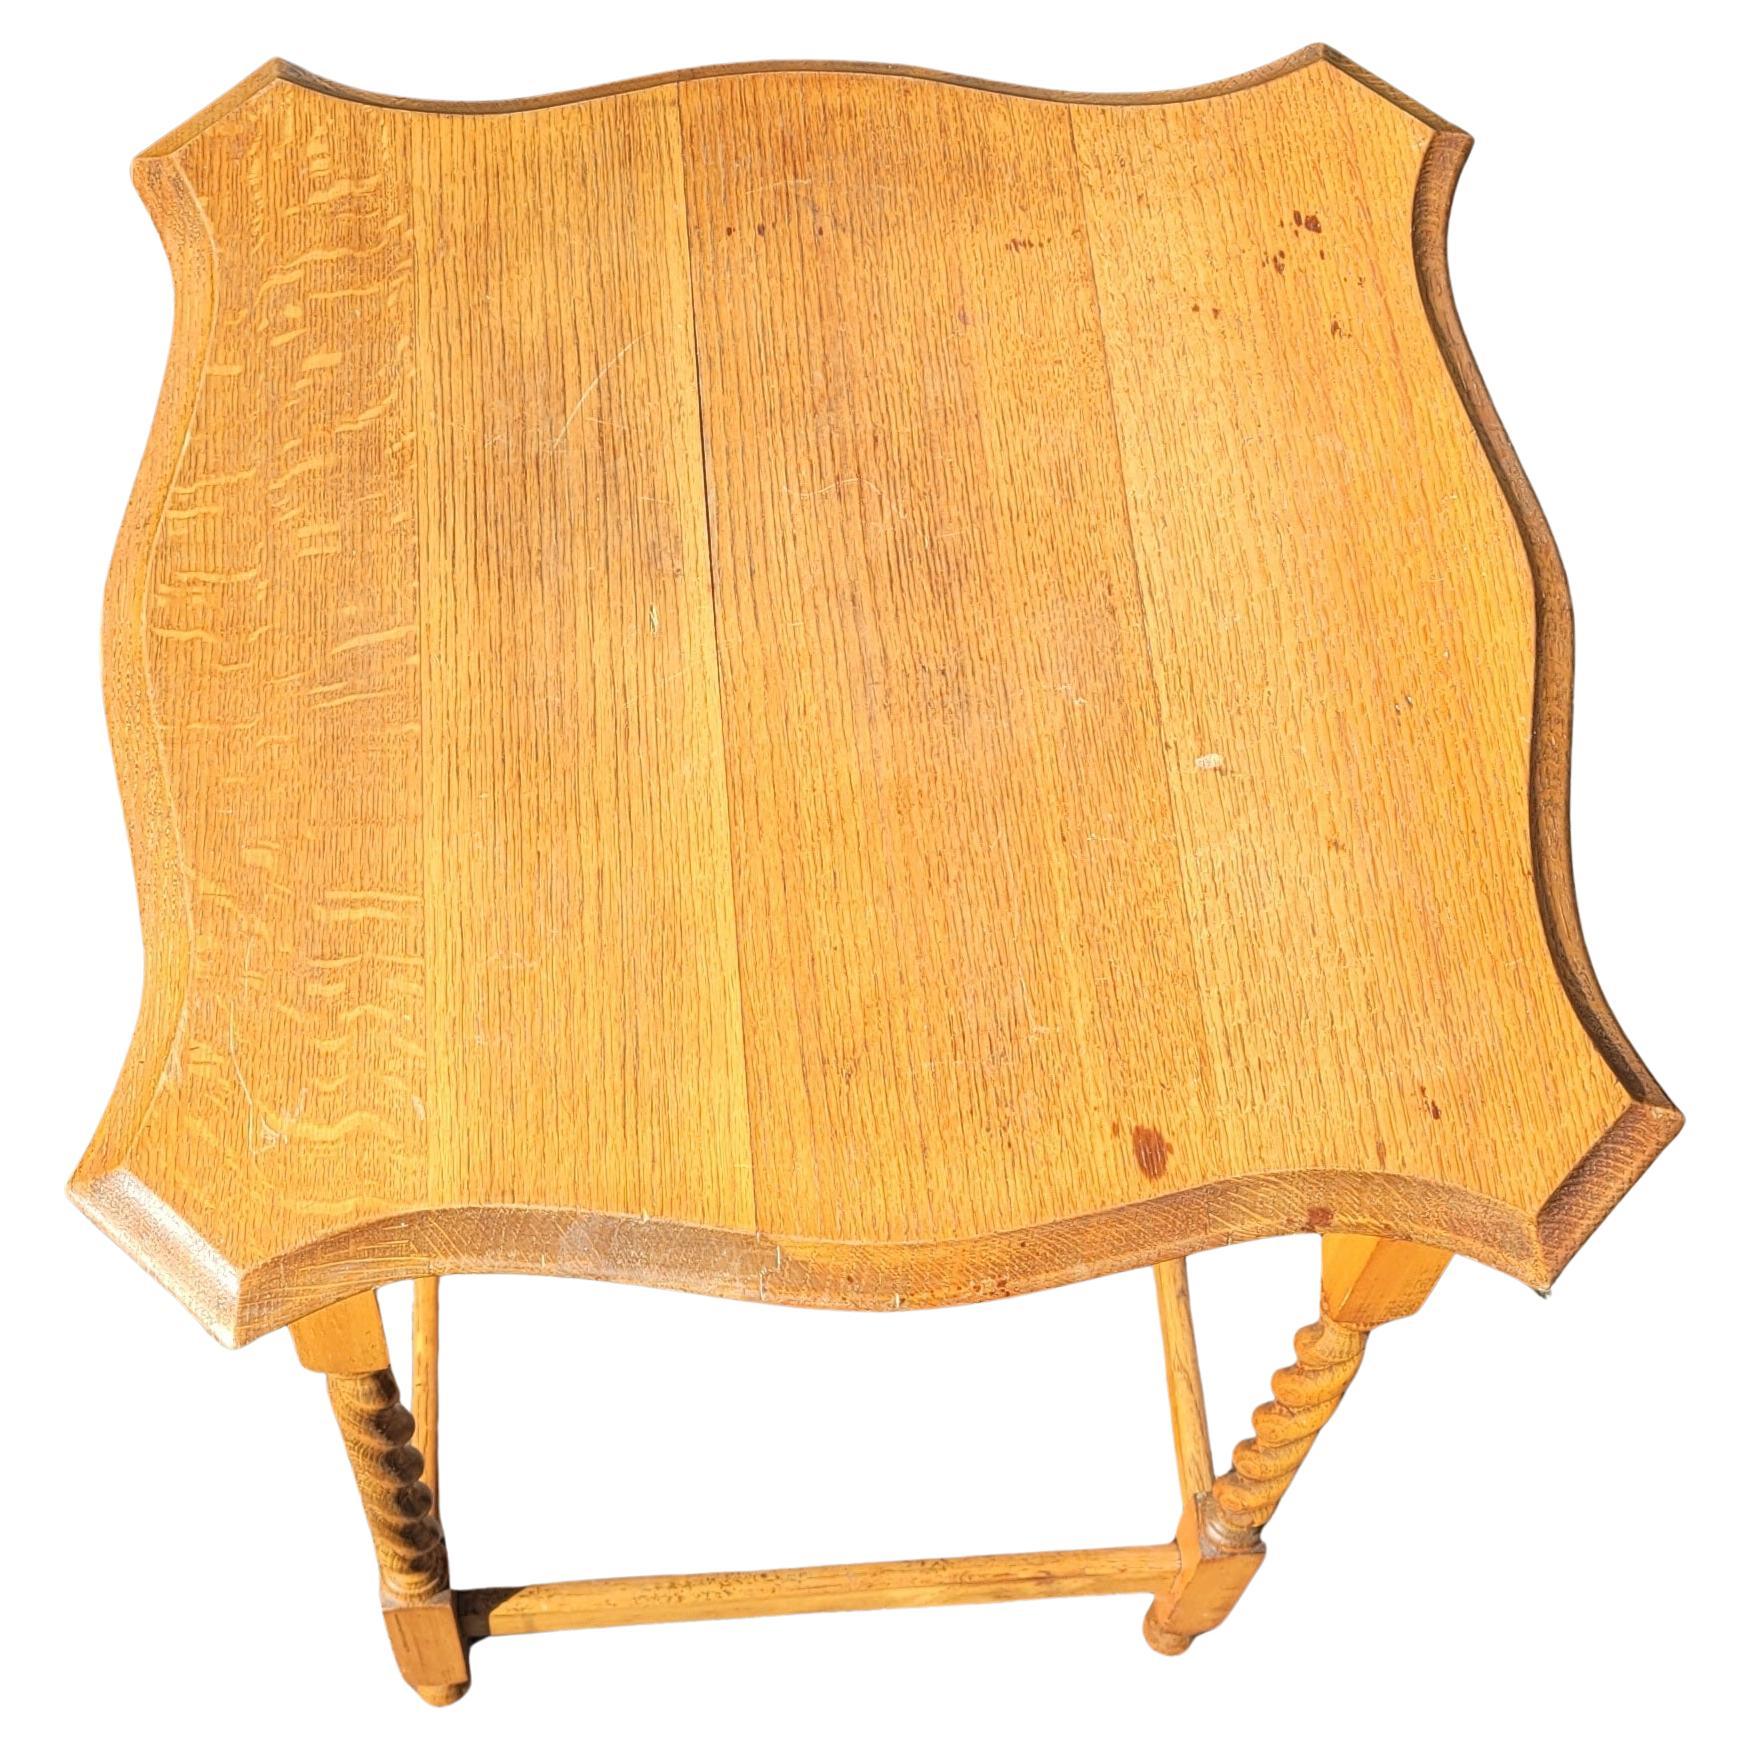 Edwardian 1920s English Golden Oak Barley Twist Occasional Side Table For Sale